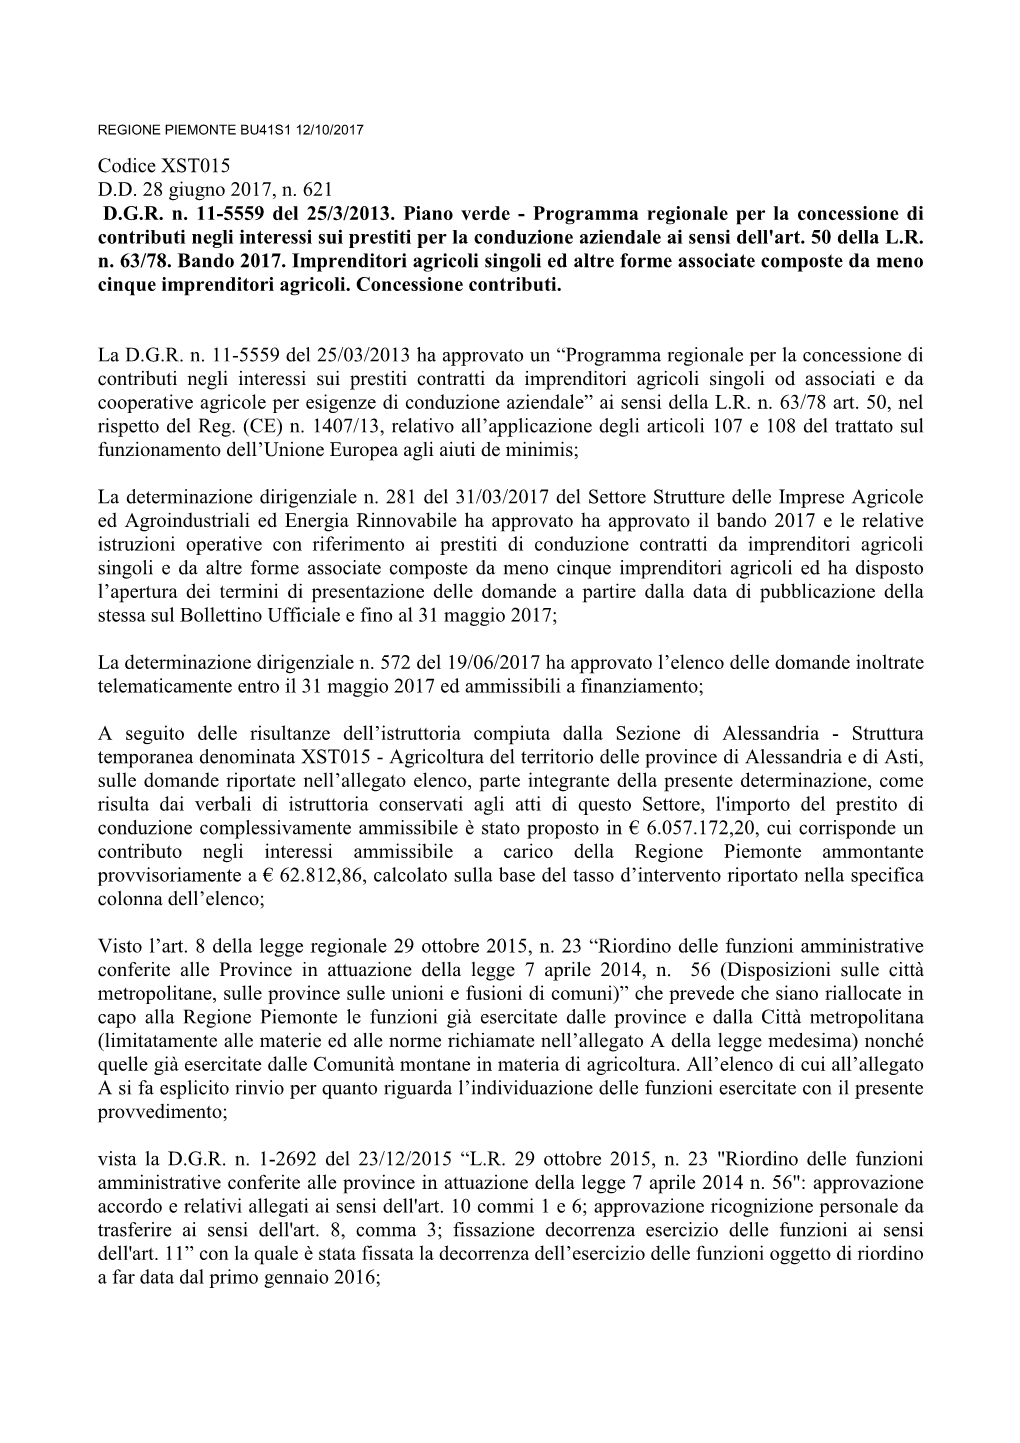 Codice XST015 D.D. 28 Giugno 2017, N. 621 D.G.R. N. 11-5559 Del 25/3/2013. Piano Verde